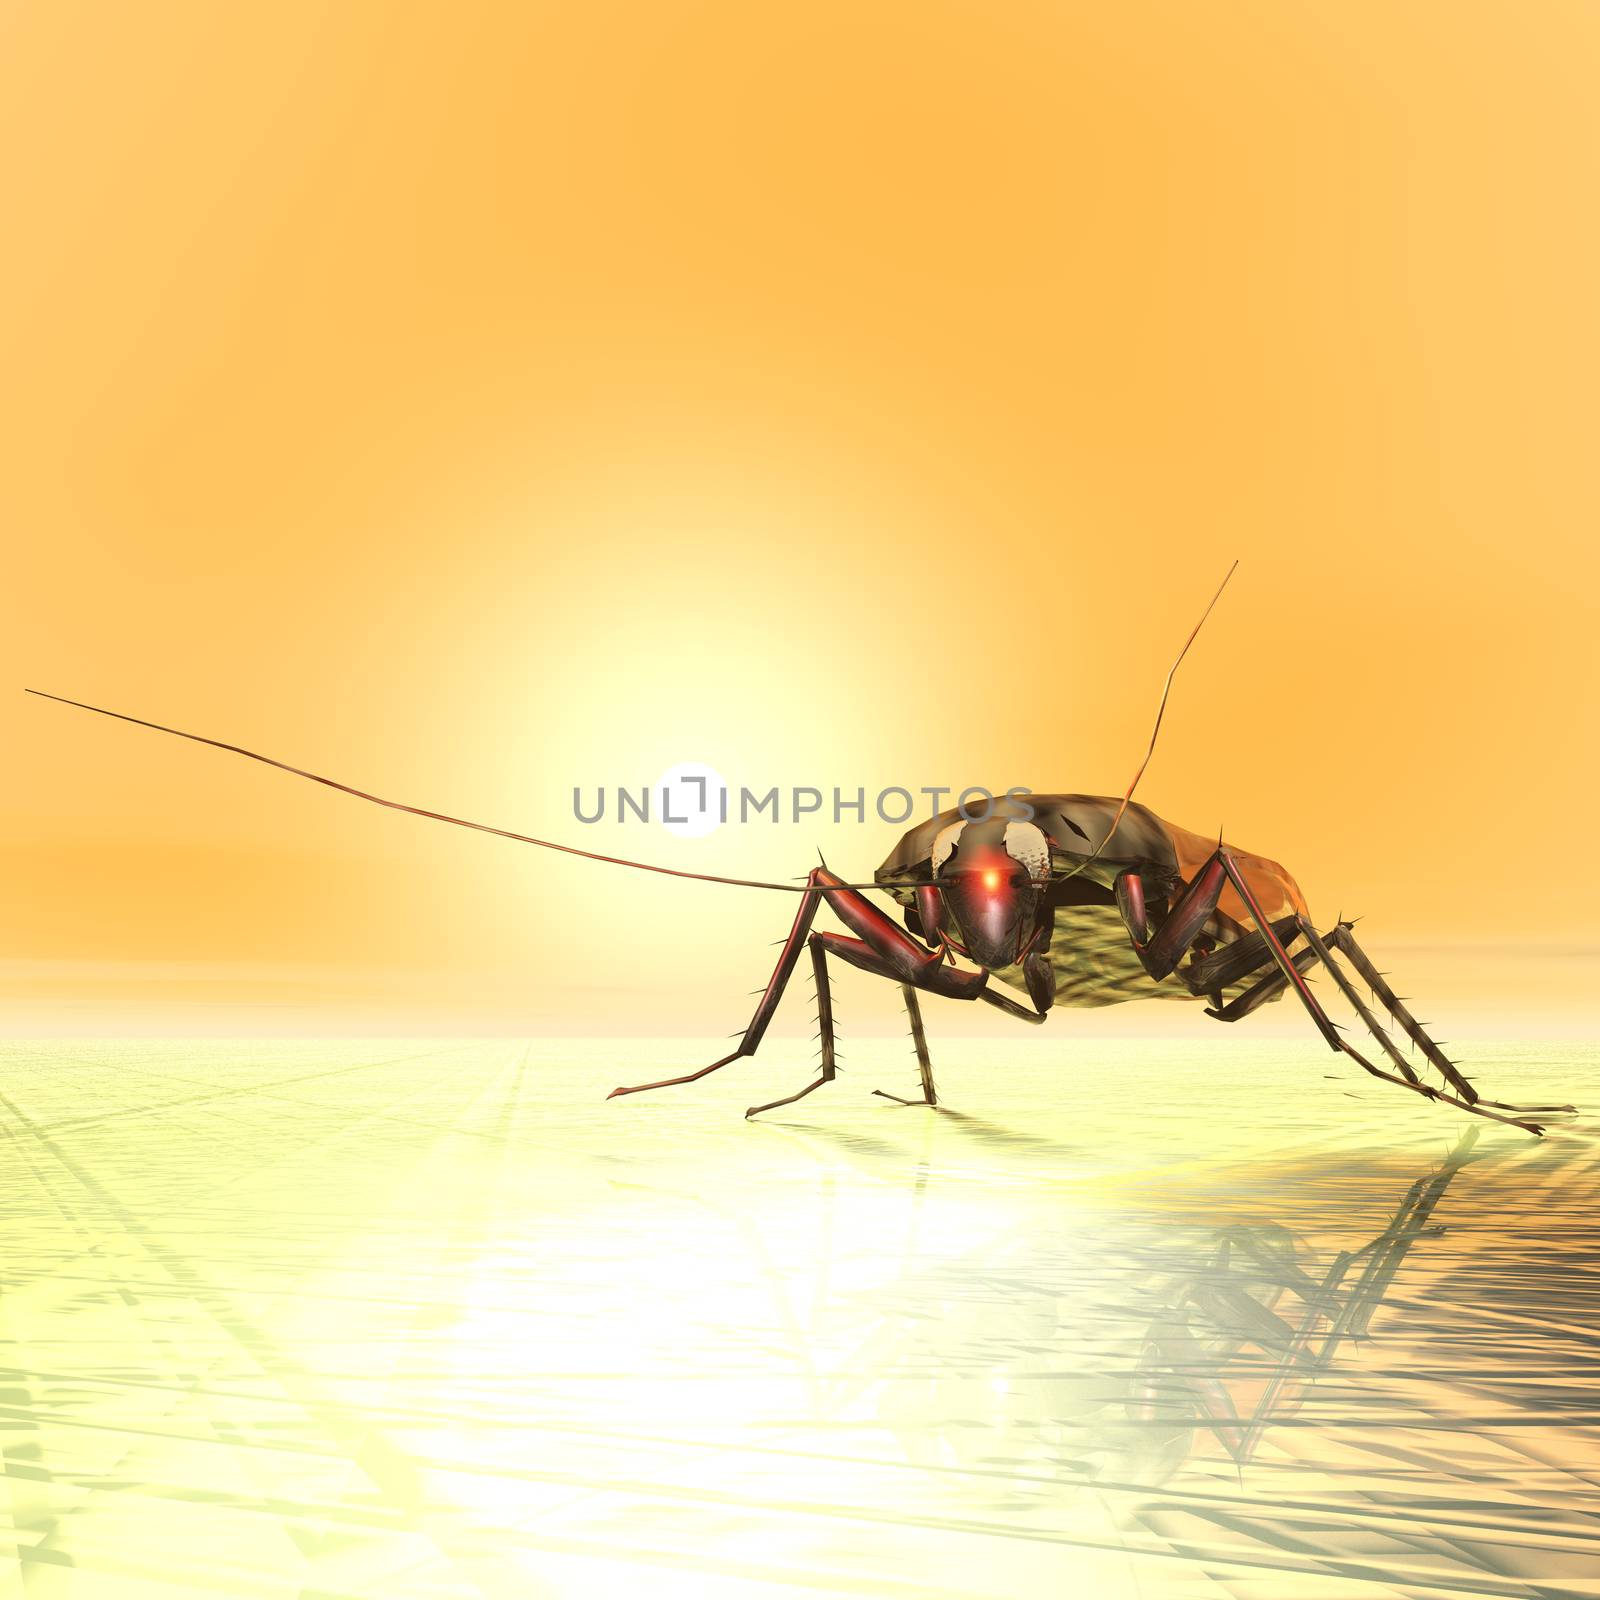 Digital Illustration of a Cockroach by 3quarks